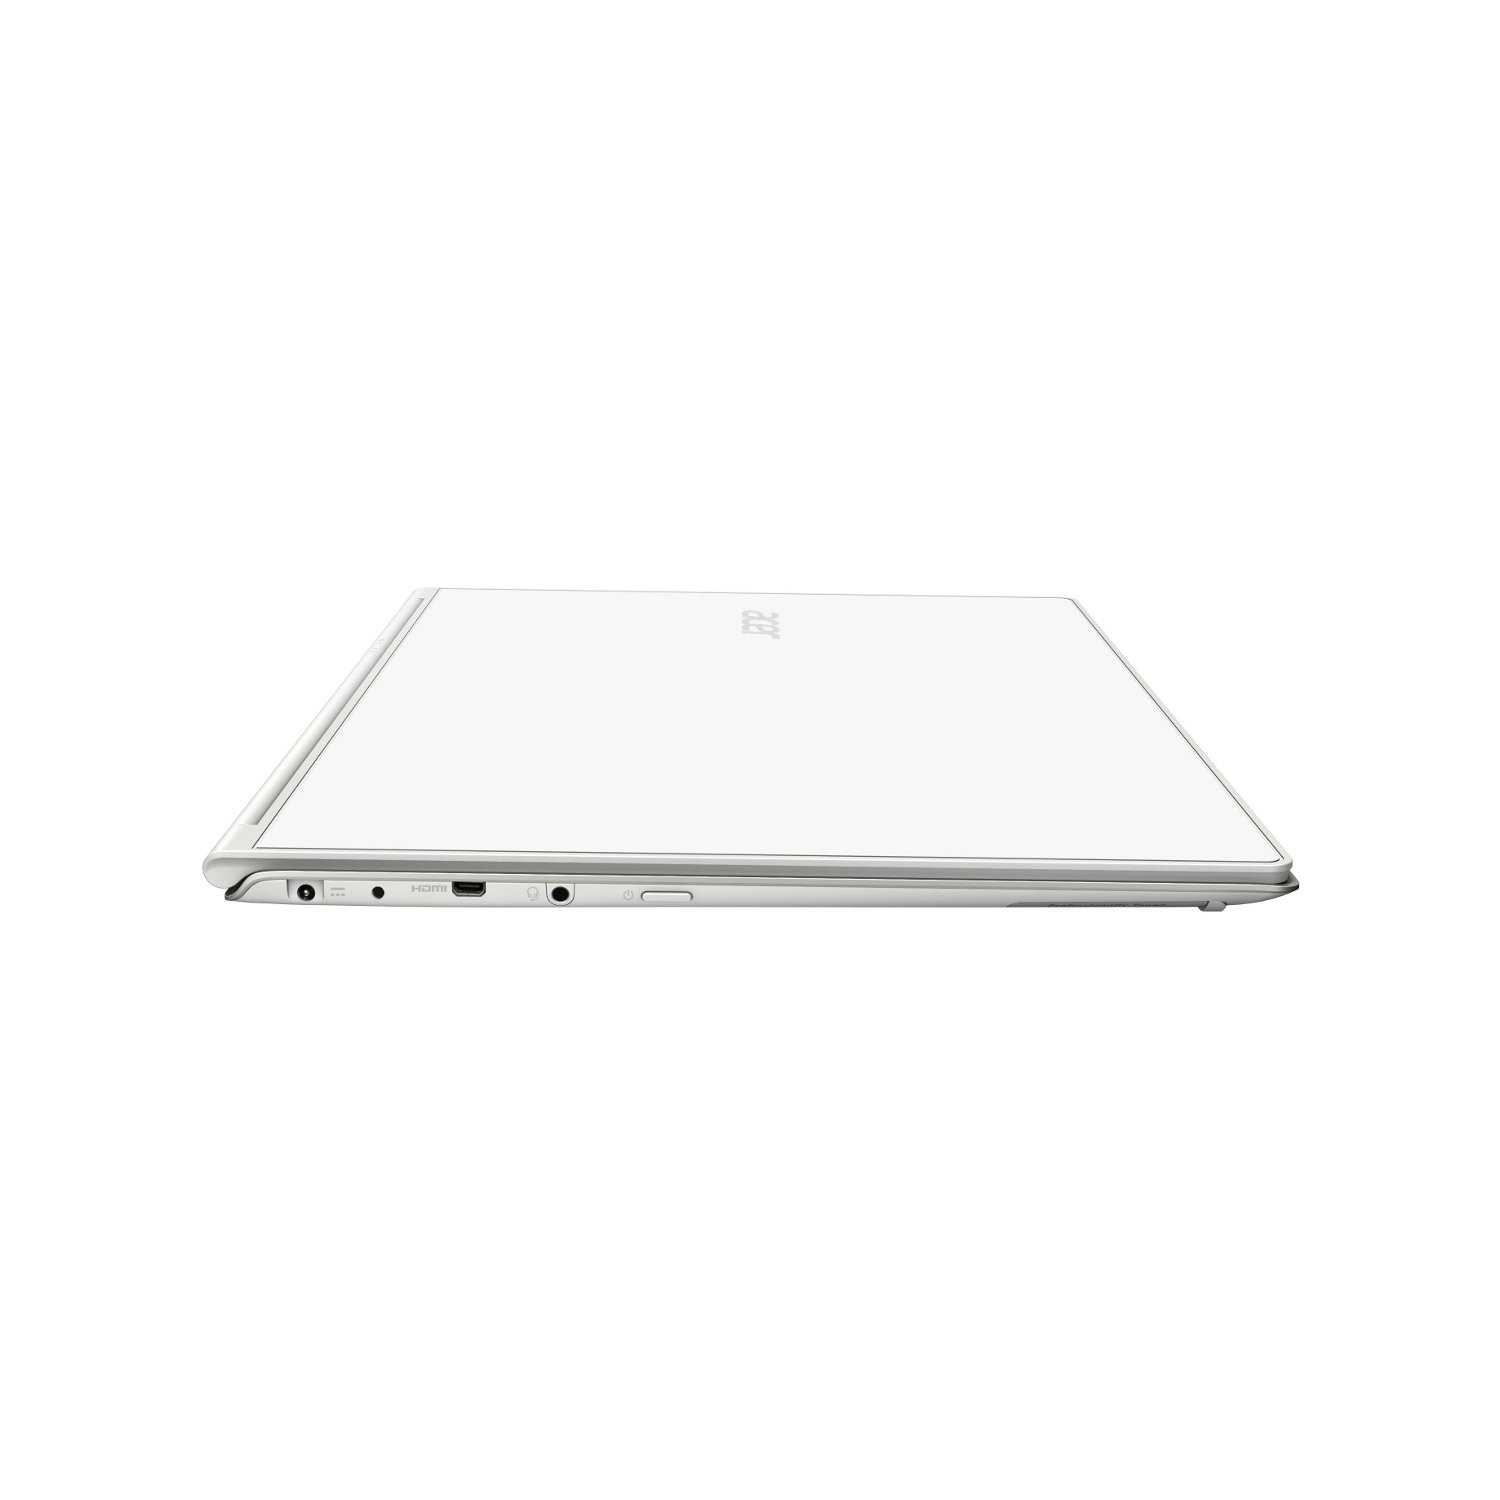 Ноутбук-планшет acer aspire s7 391-73534g25aws